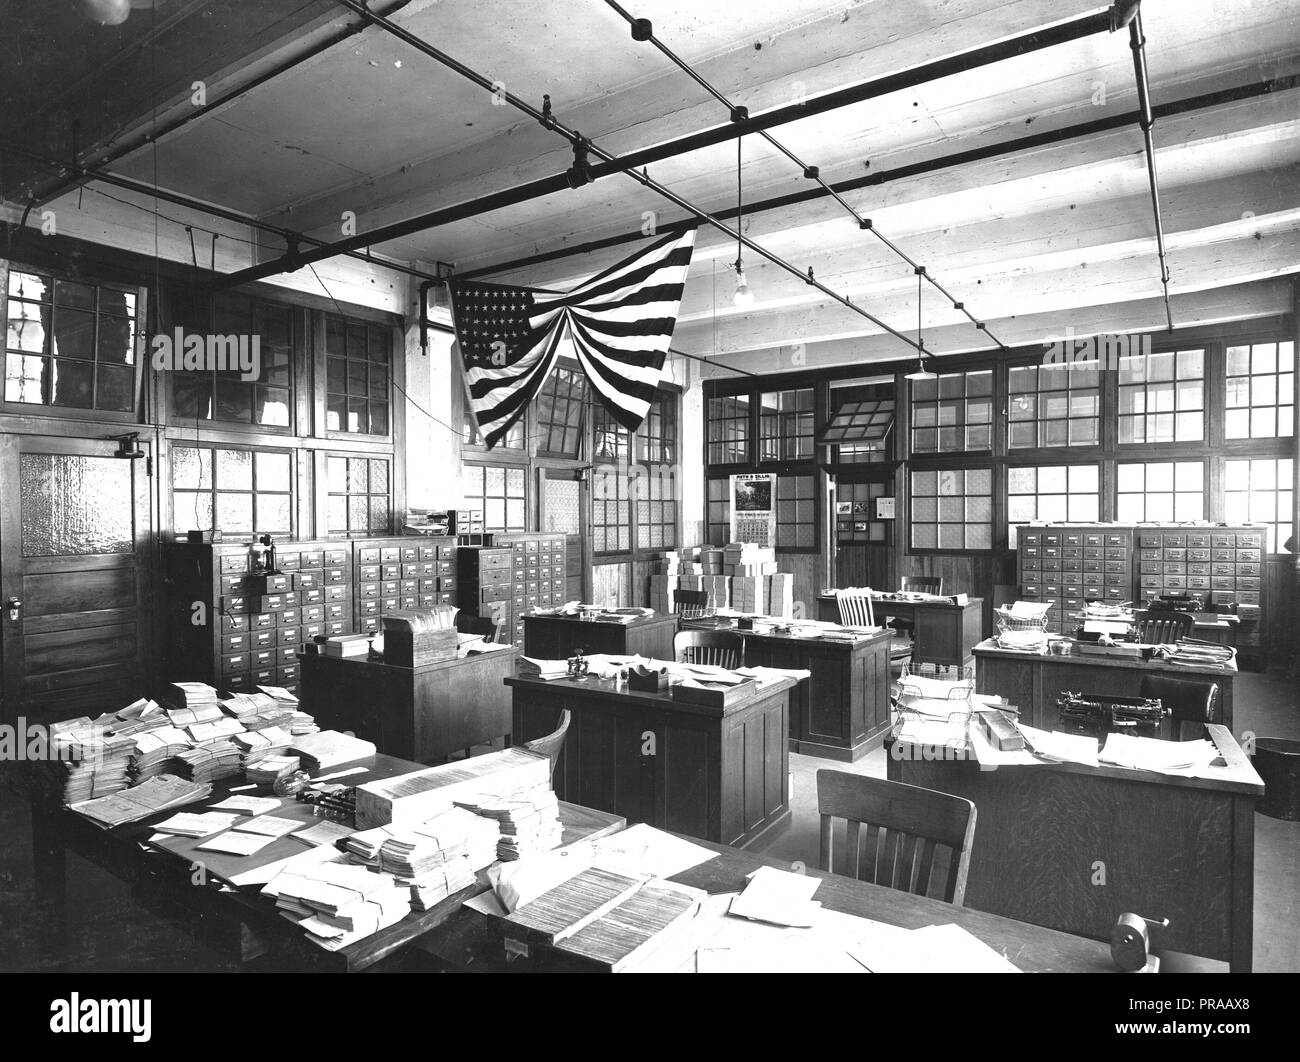 1918 - Alien Property Custodian - Property Seized - Alien Property seized by U.S. Government. Eiseman Magneto Co Stock Photo